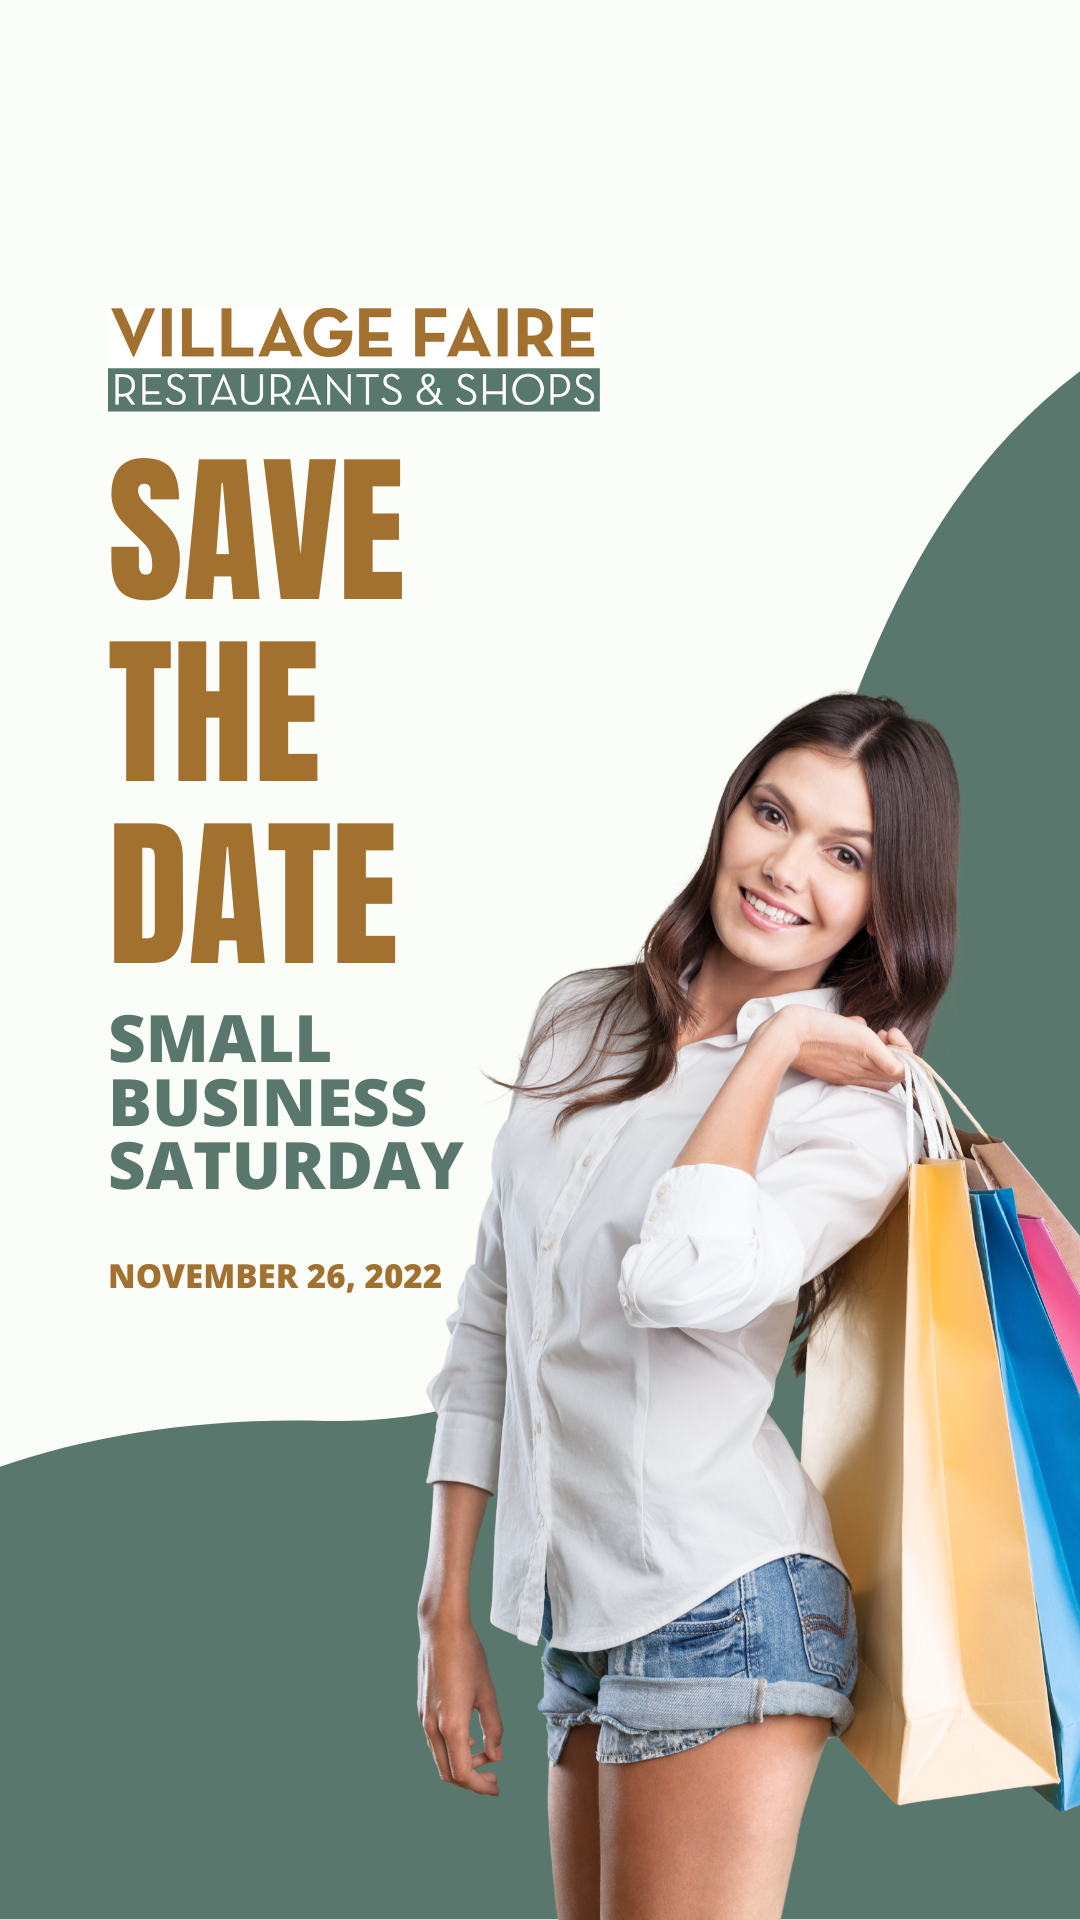 Carlsbad Small Business Saturday Deals - Nov 27, 2022